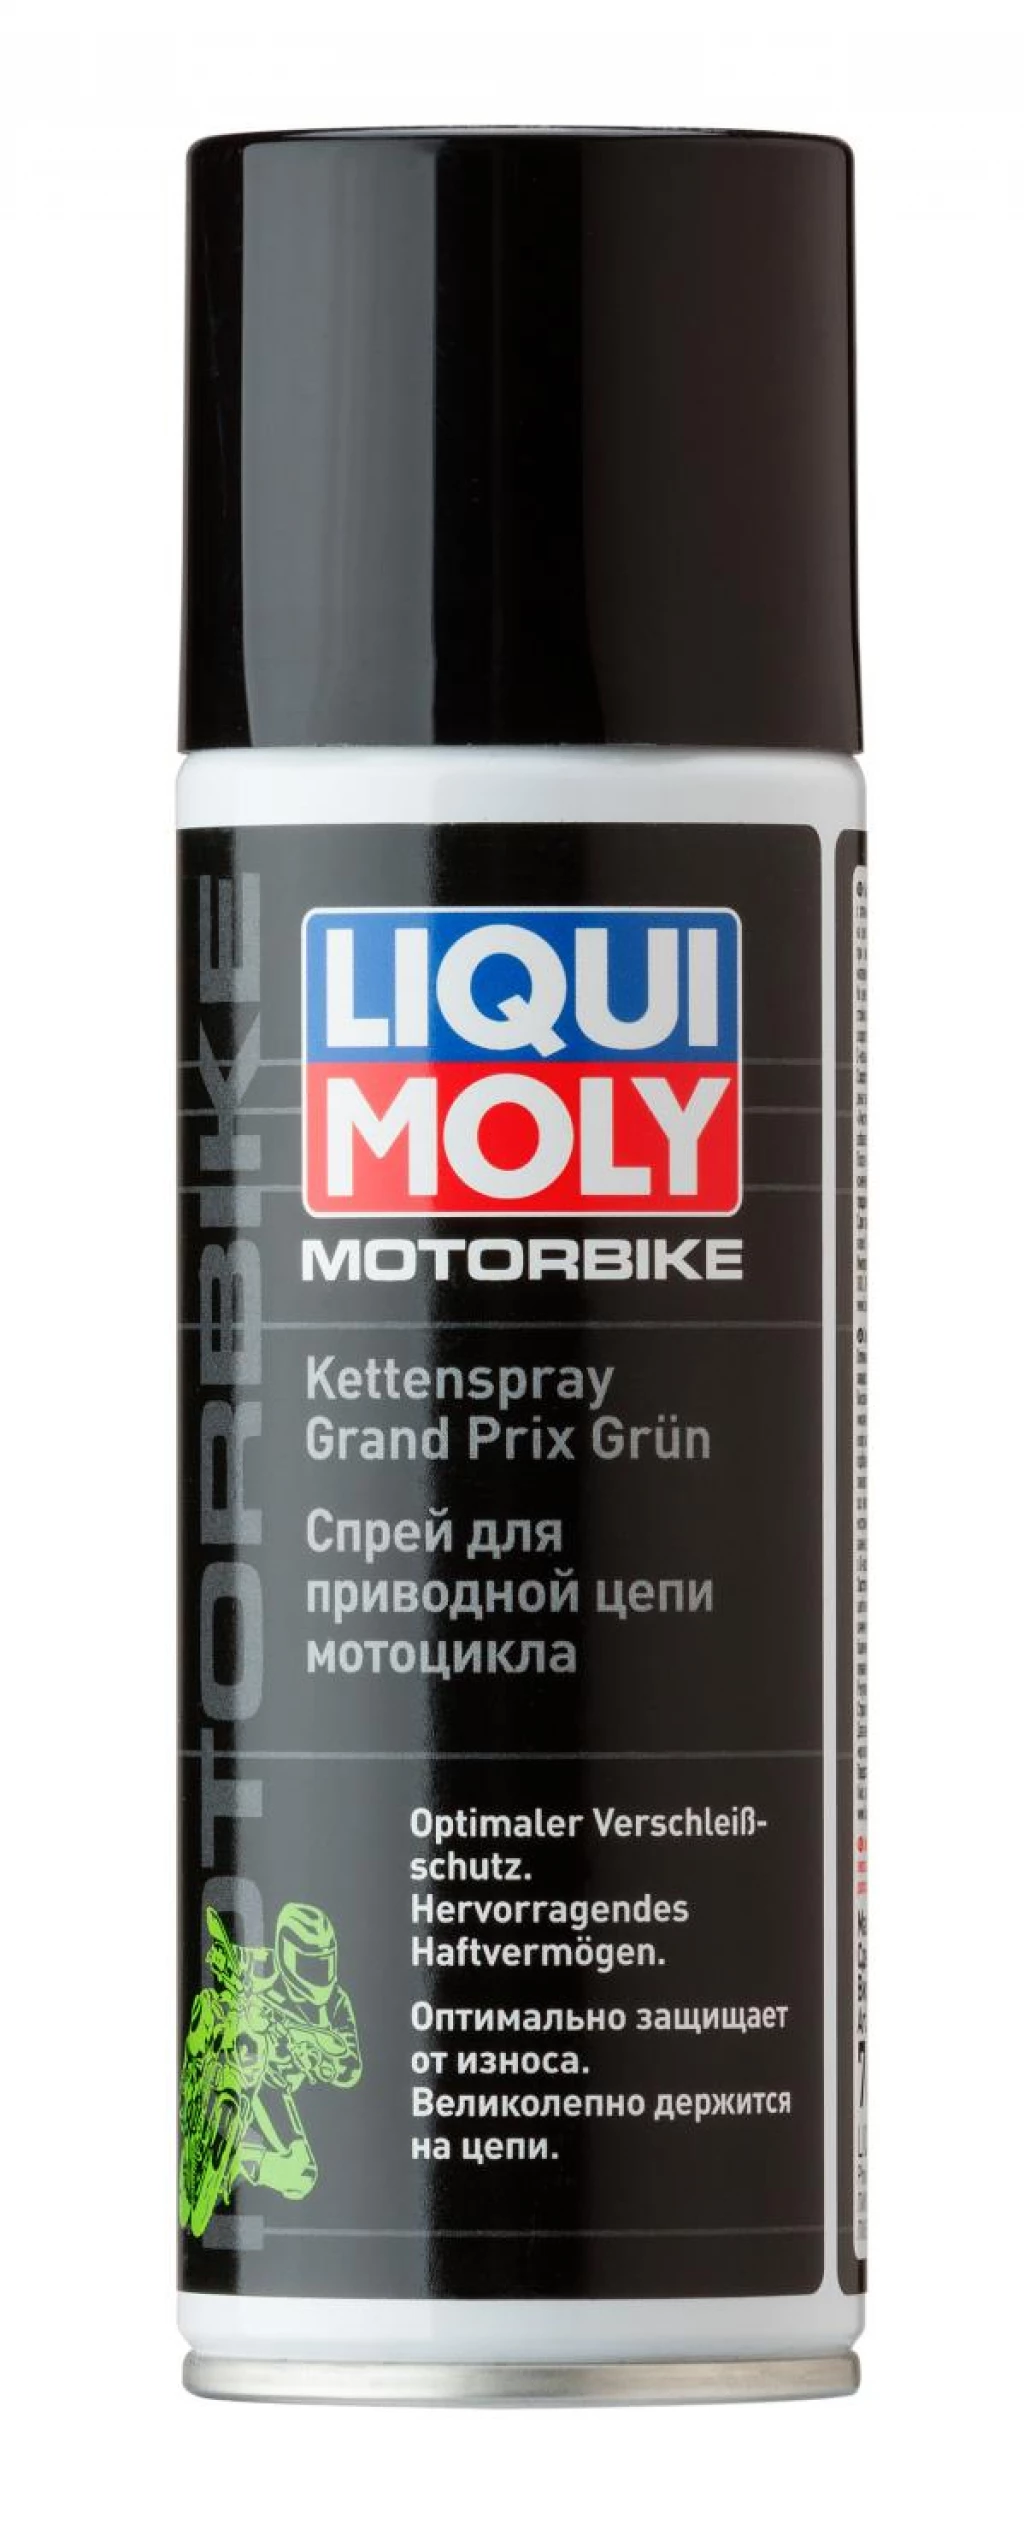 Спрей для приводной цепи мотоц. Liqui Moly Motorrad Kettenspray Grand спрей 200 мл